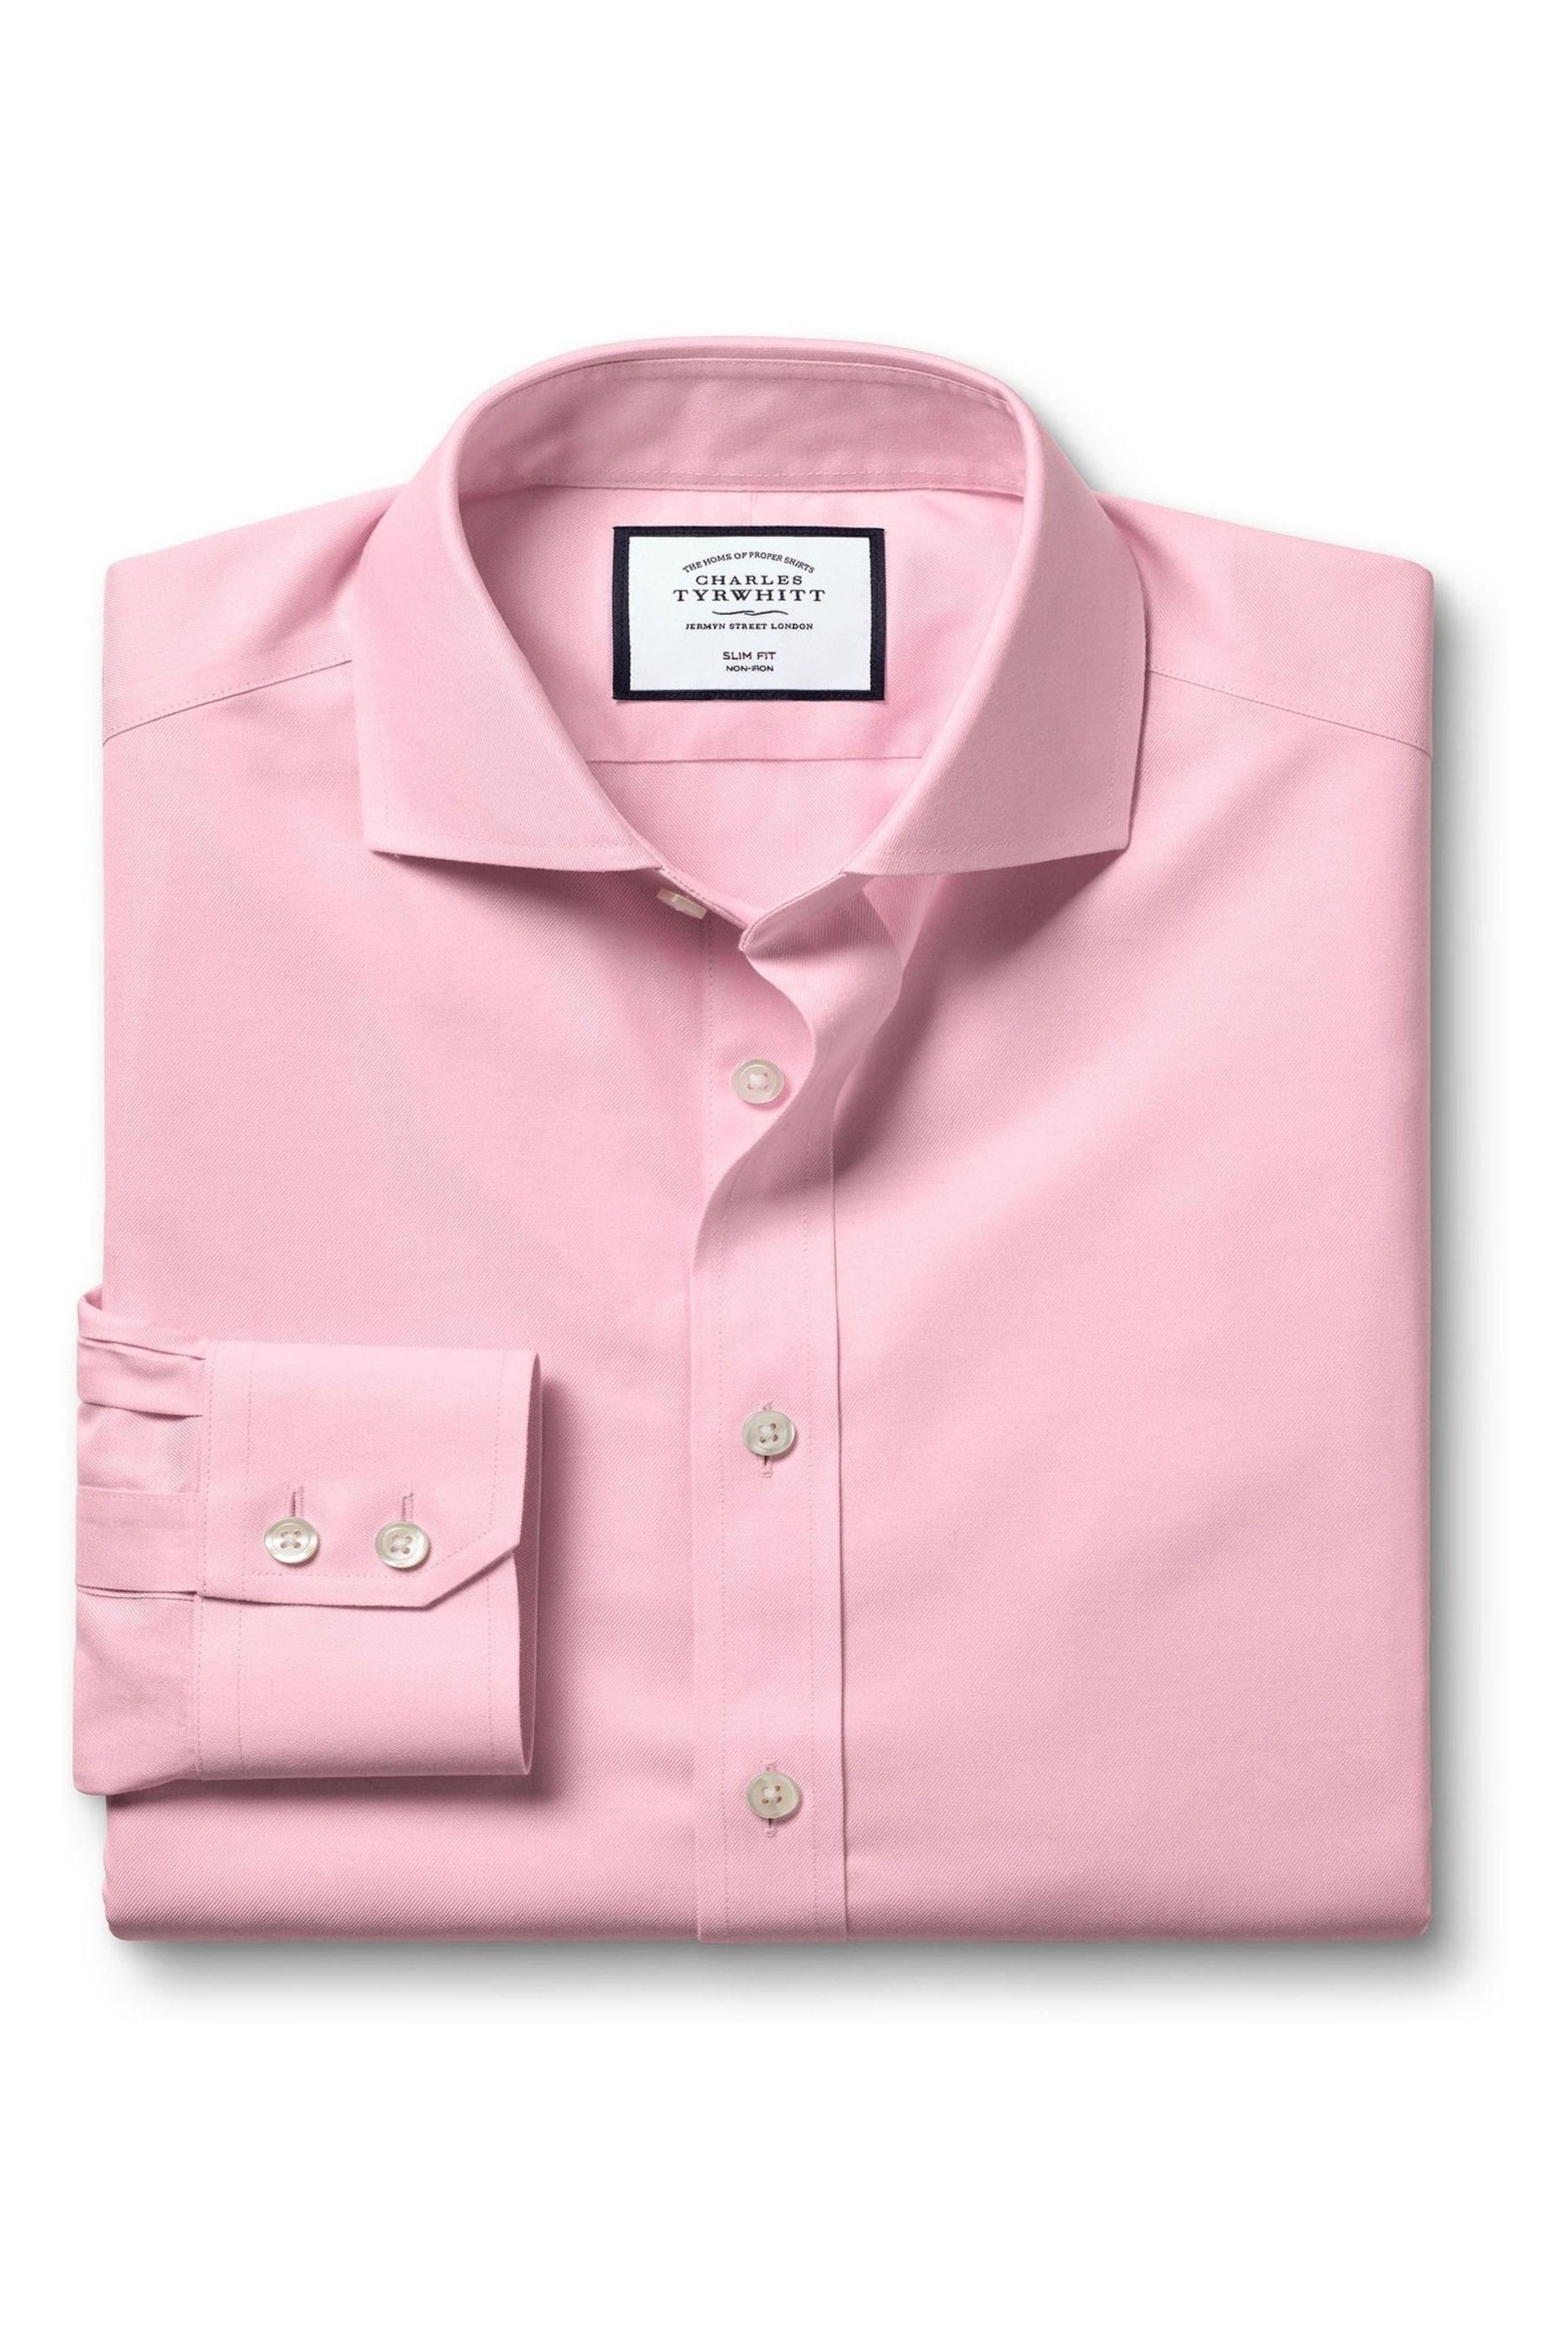 Charles Tyrwhitt Pink Non Iron Twill Cutaway Slim Fit Shirt - Image 5 of 5